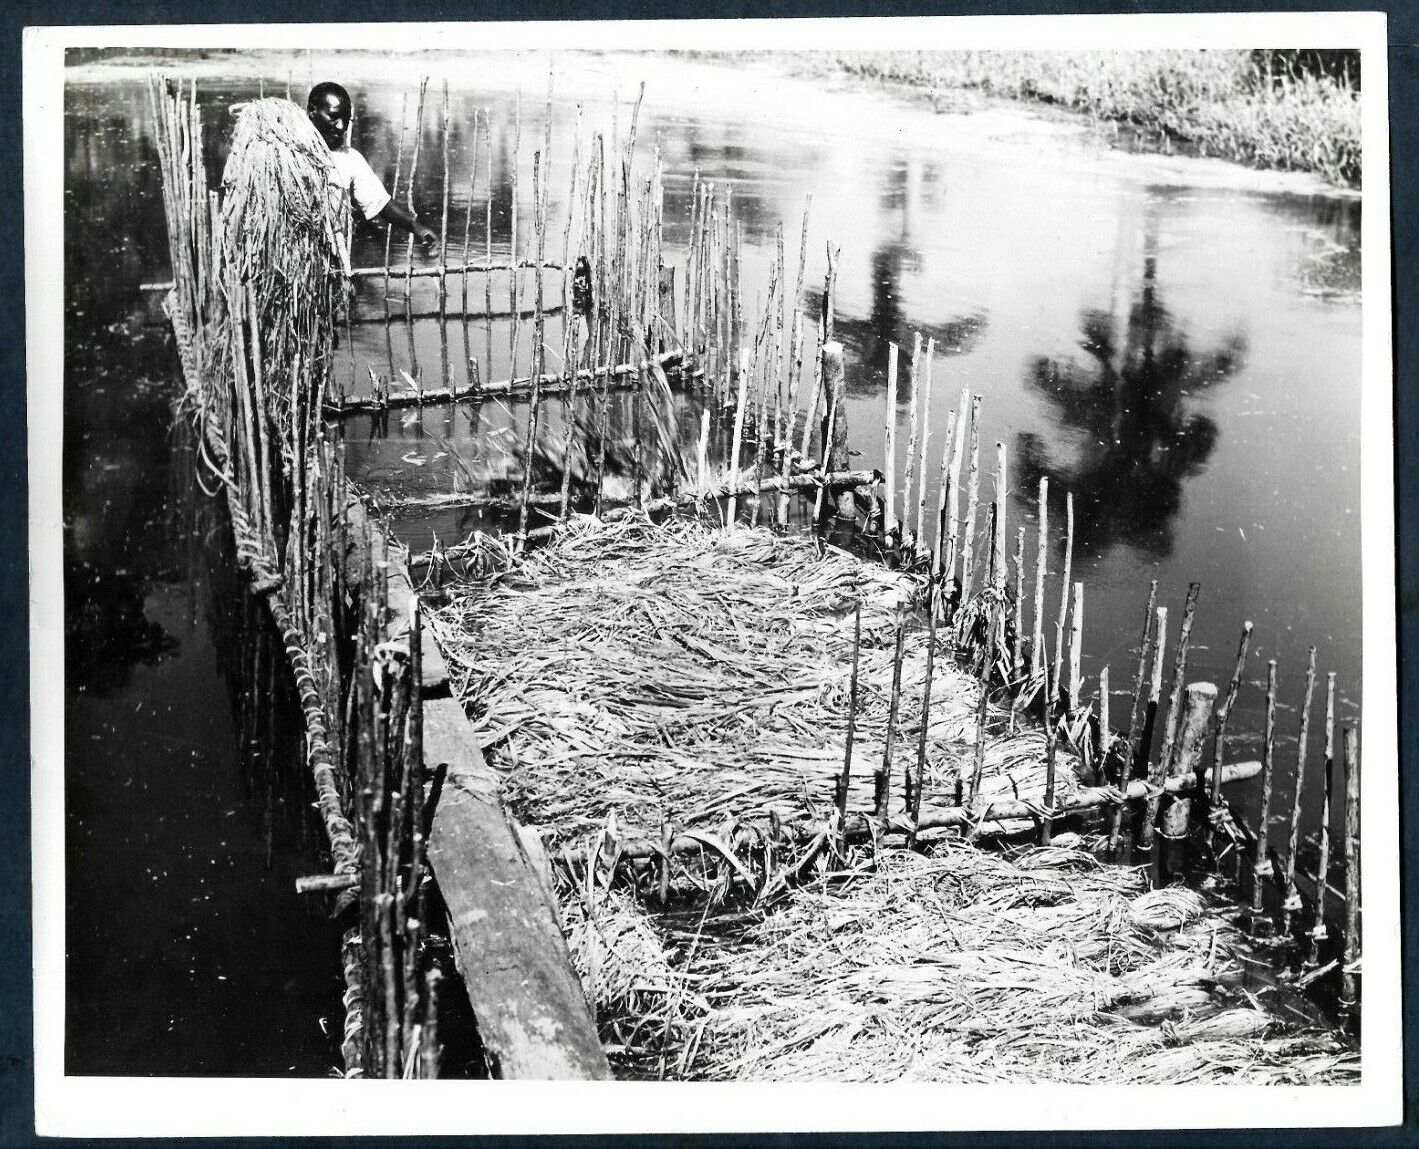 KENAF PLANT NEW COMMERCIAL CROP FOR WESTERN HEMISPHERE1950s VINTAGE Photo Y 195